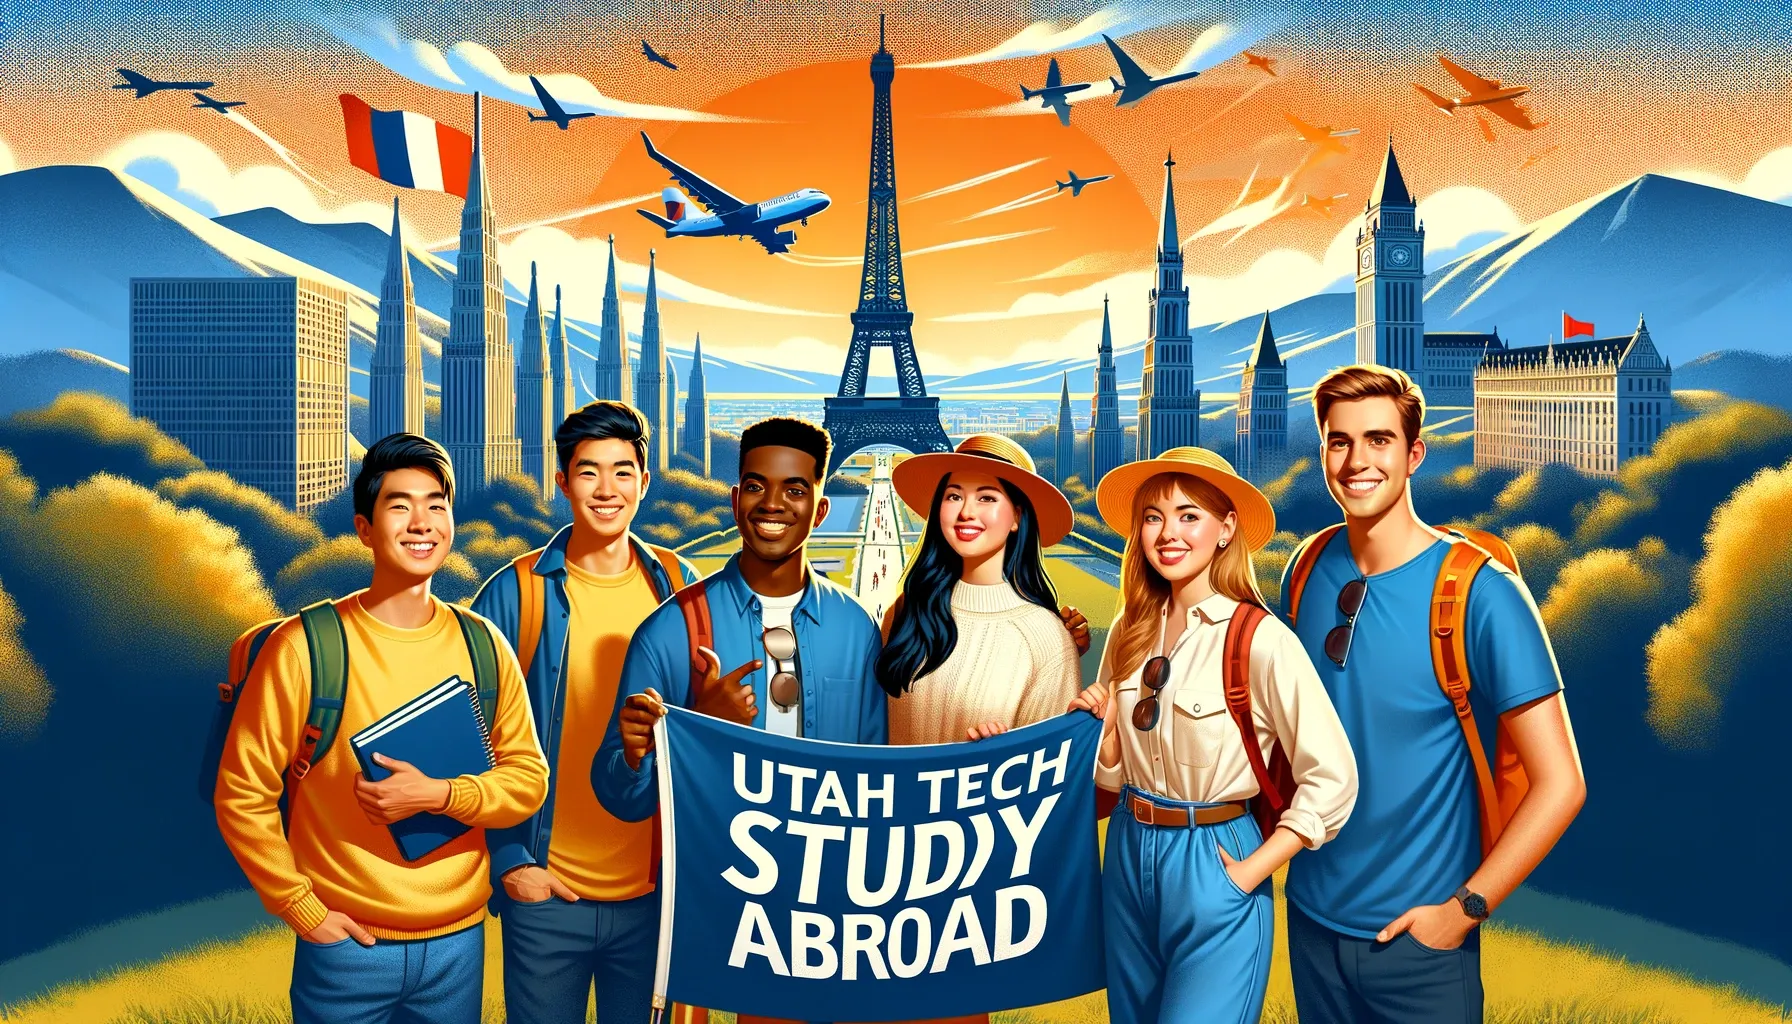 Utah Tech Study Abroad: An Insight